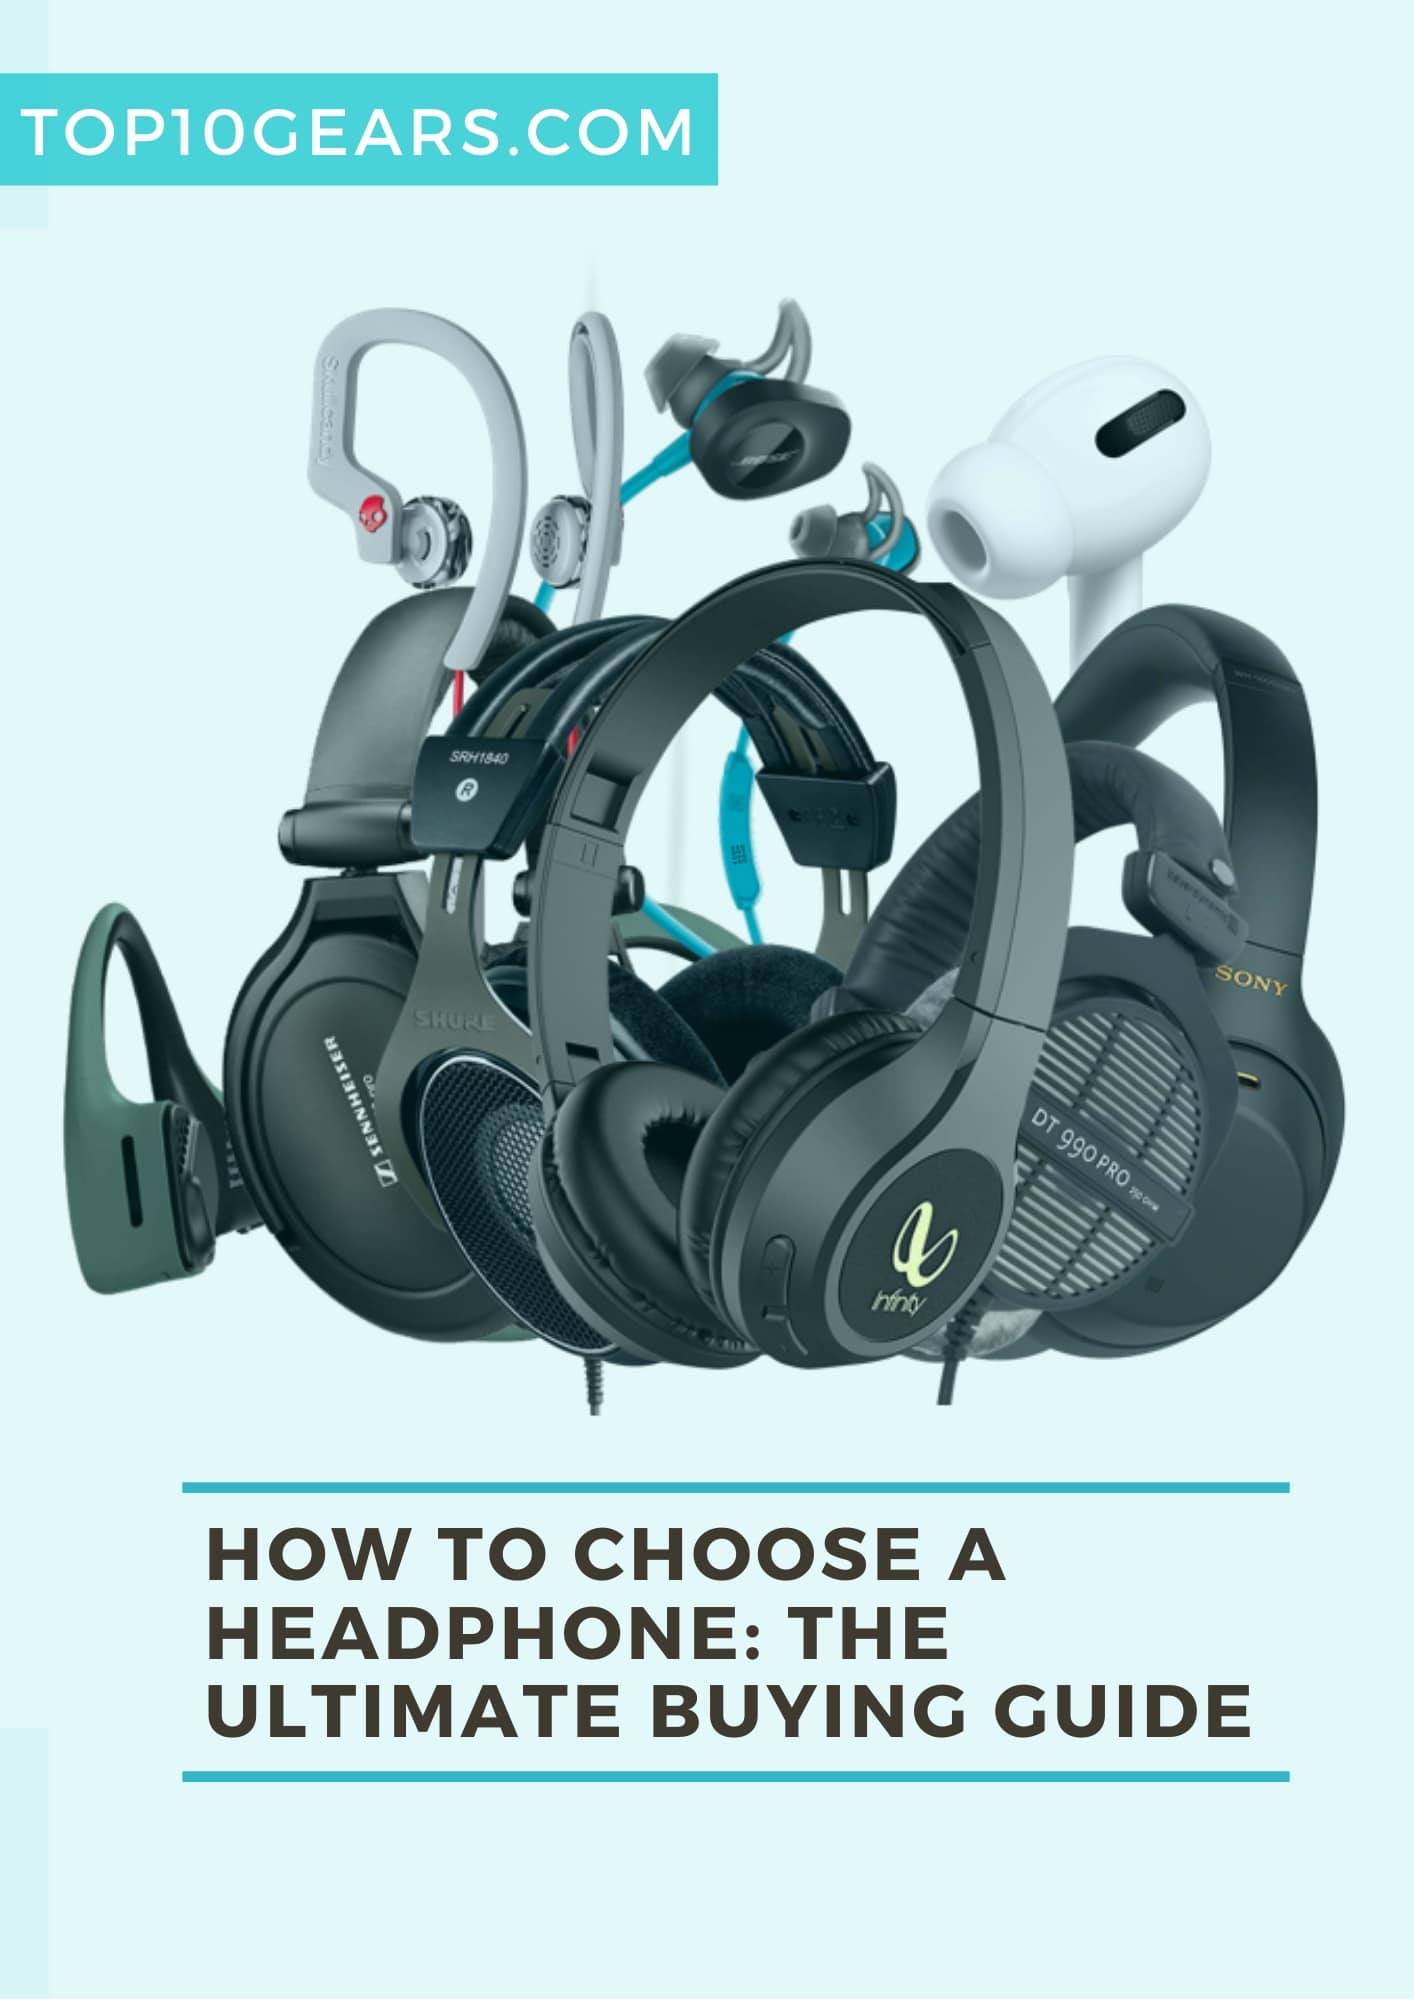 How to choose a headphone